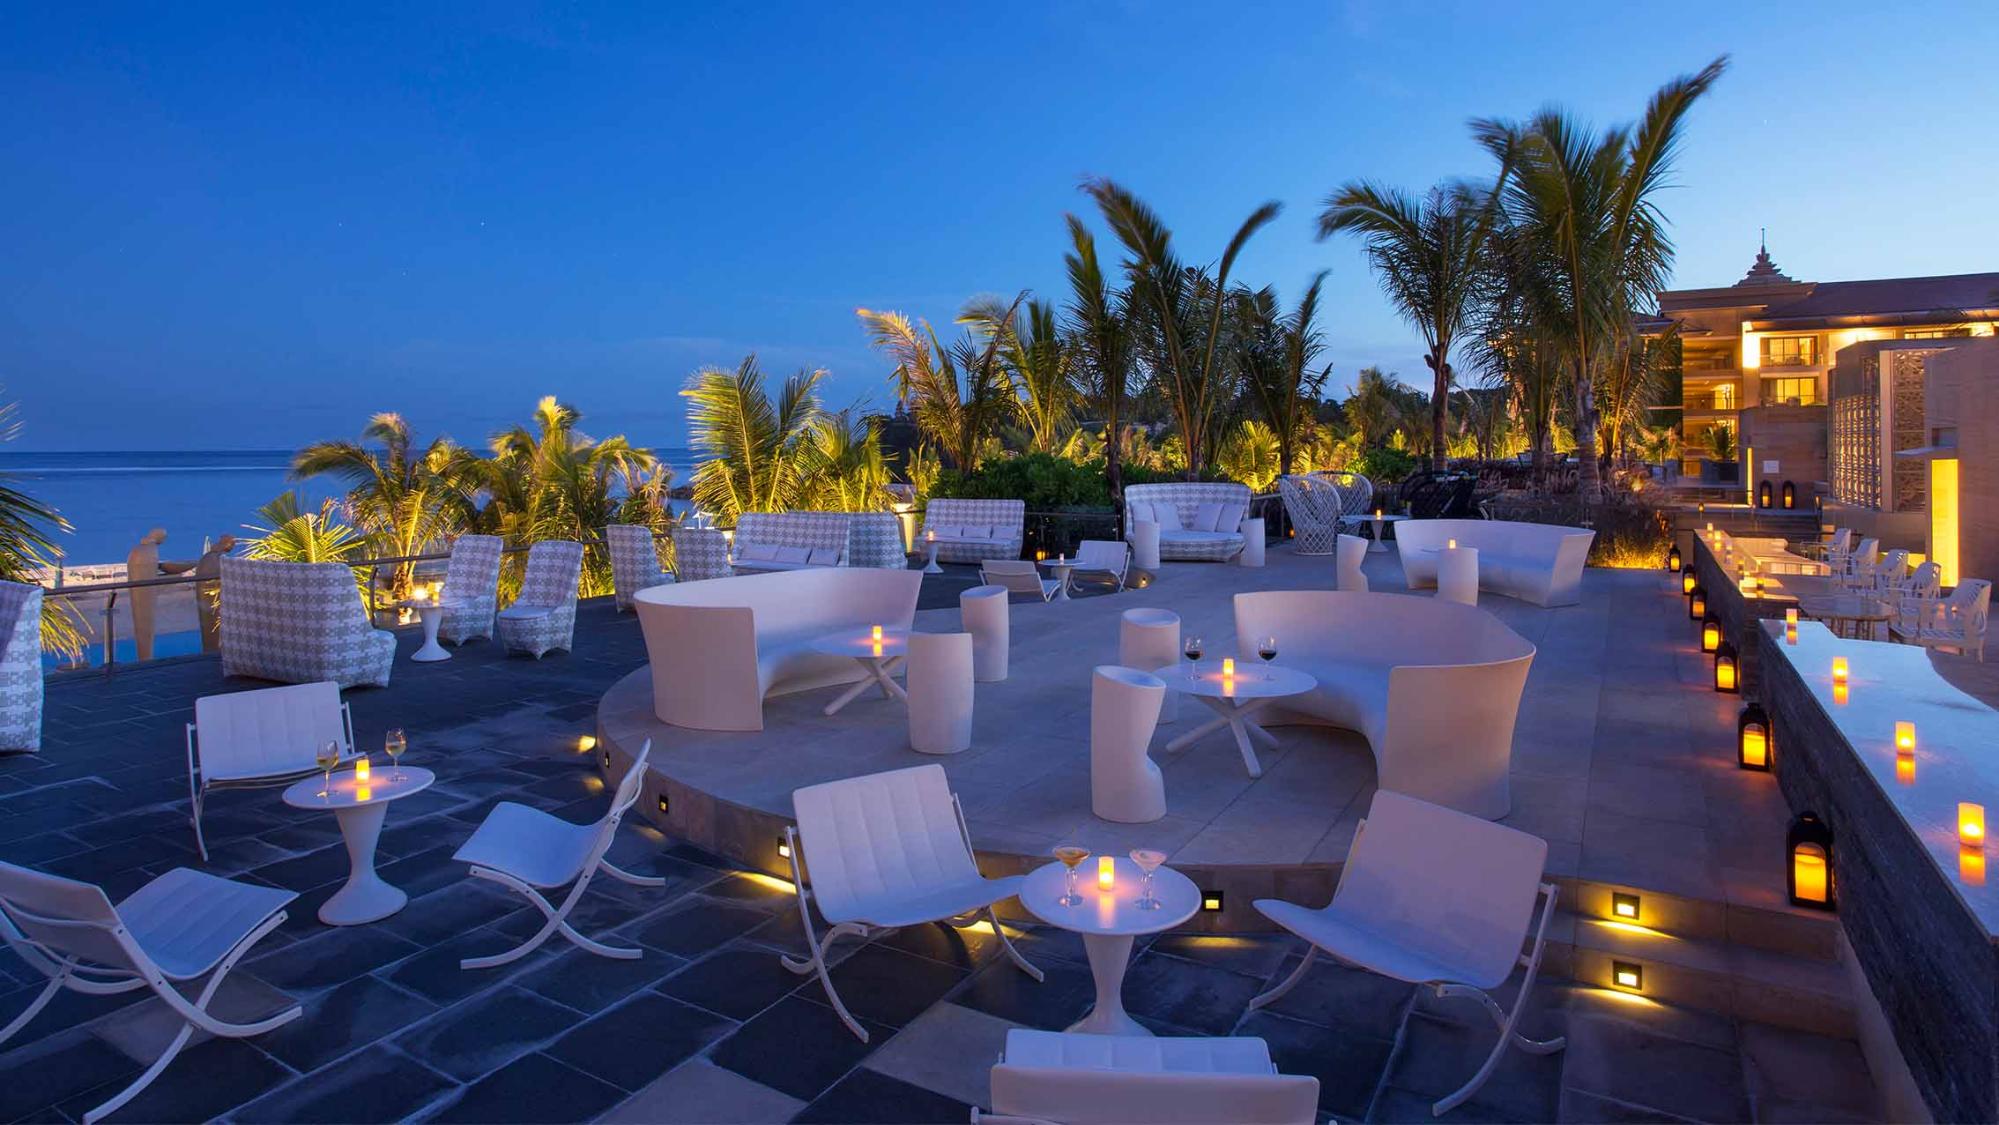 Honeymoon Hotels in Bali